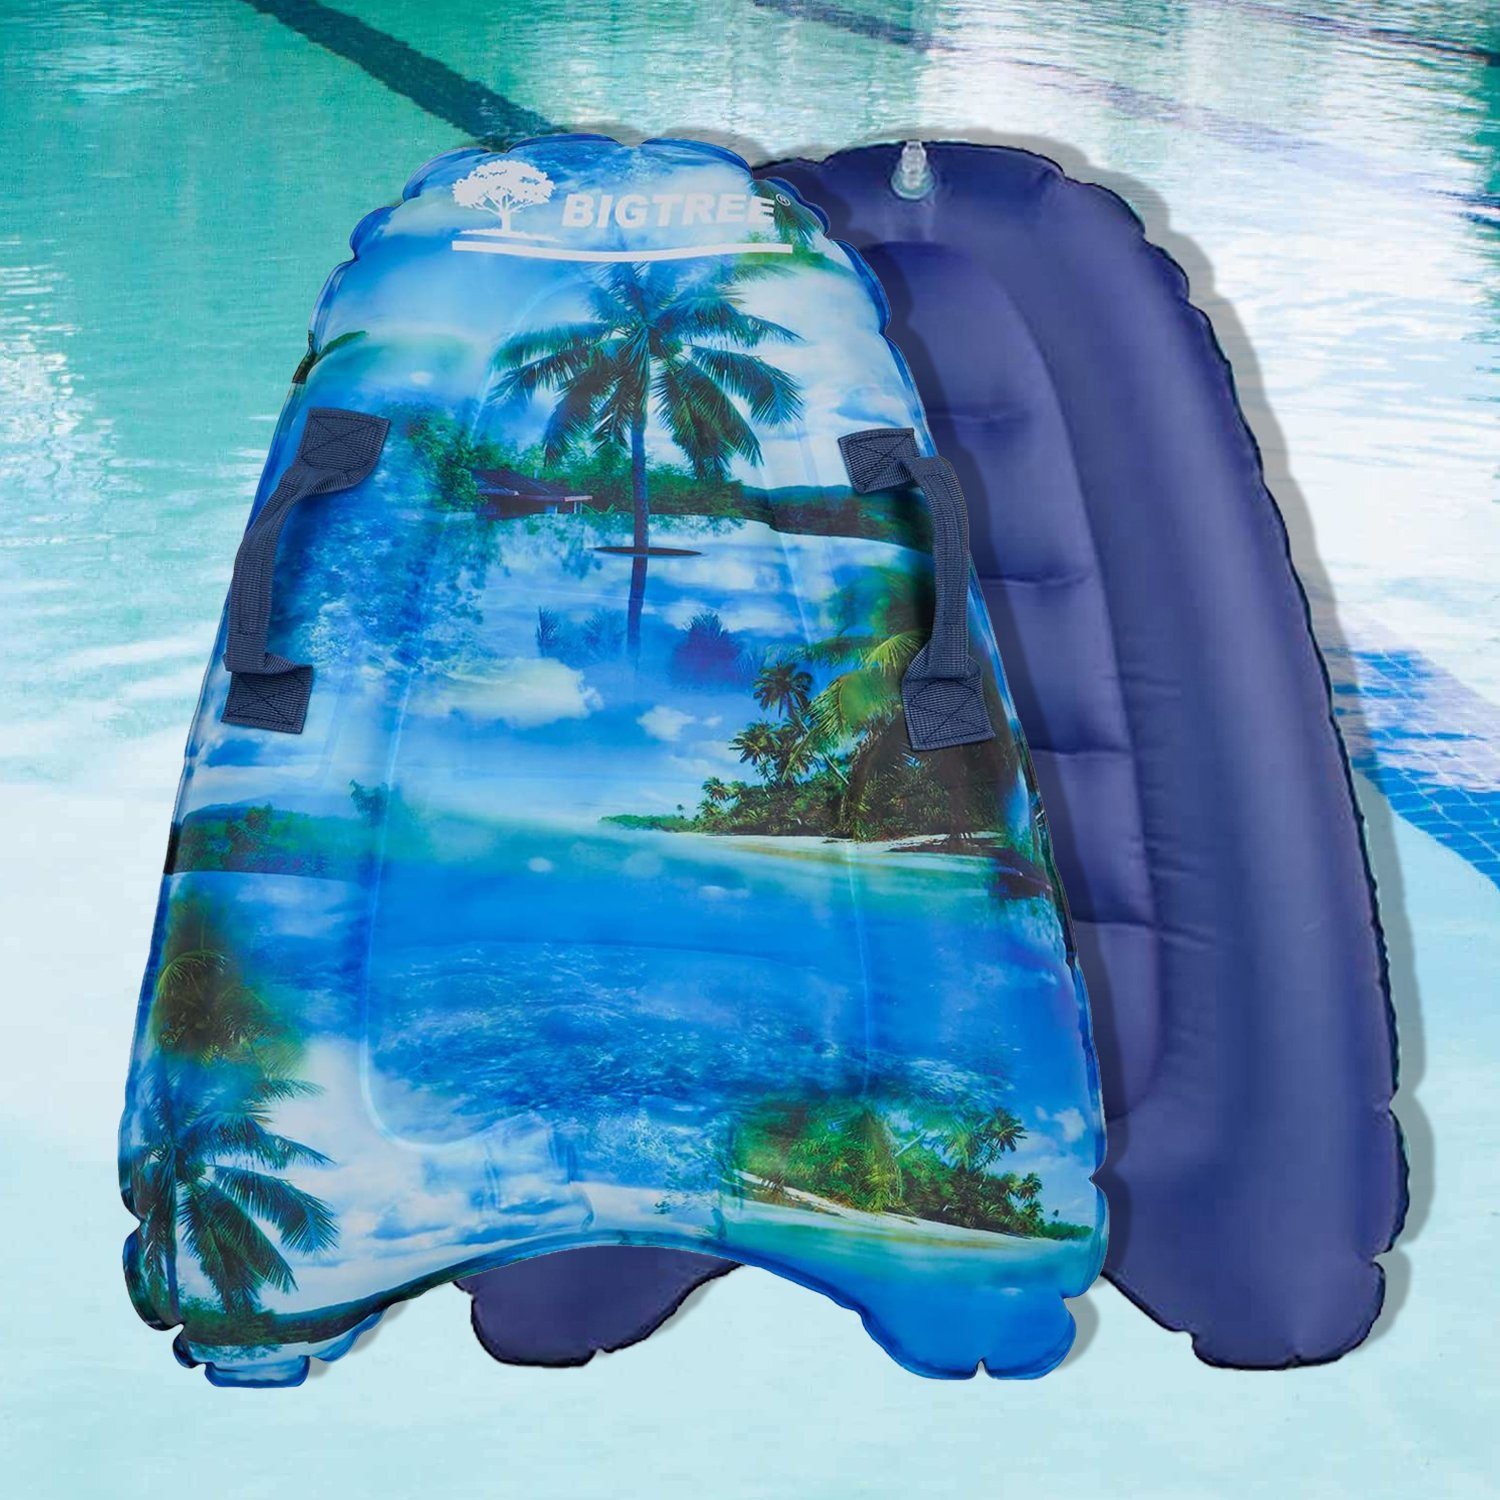 KAHOO Inflatable SUP-Board Aufblasbares Bodyboard, 52x14x70cm, Schwimmhilfe Baum